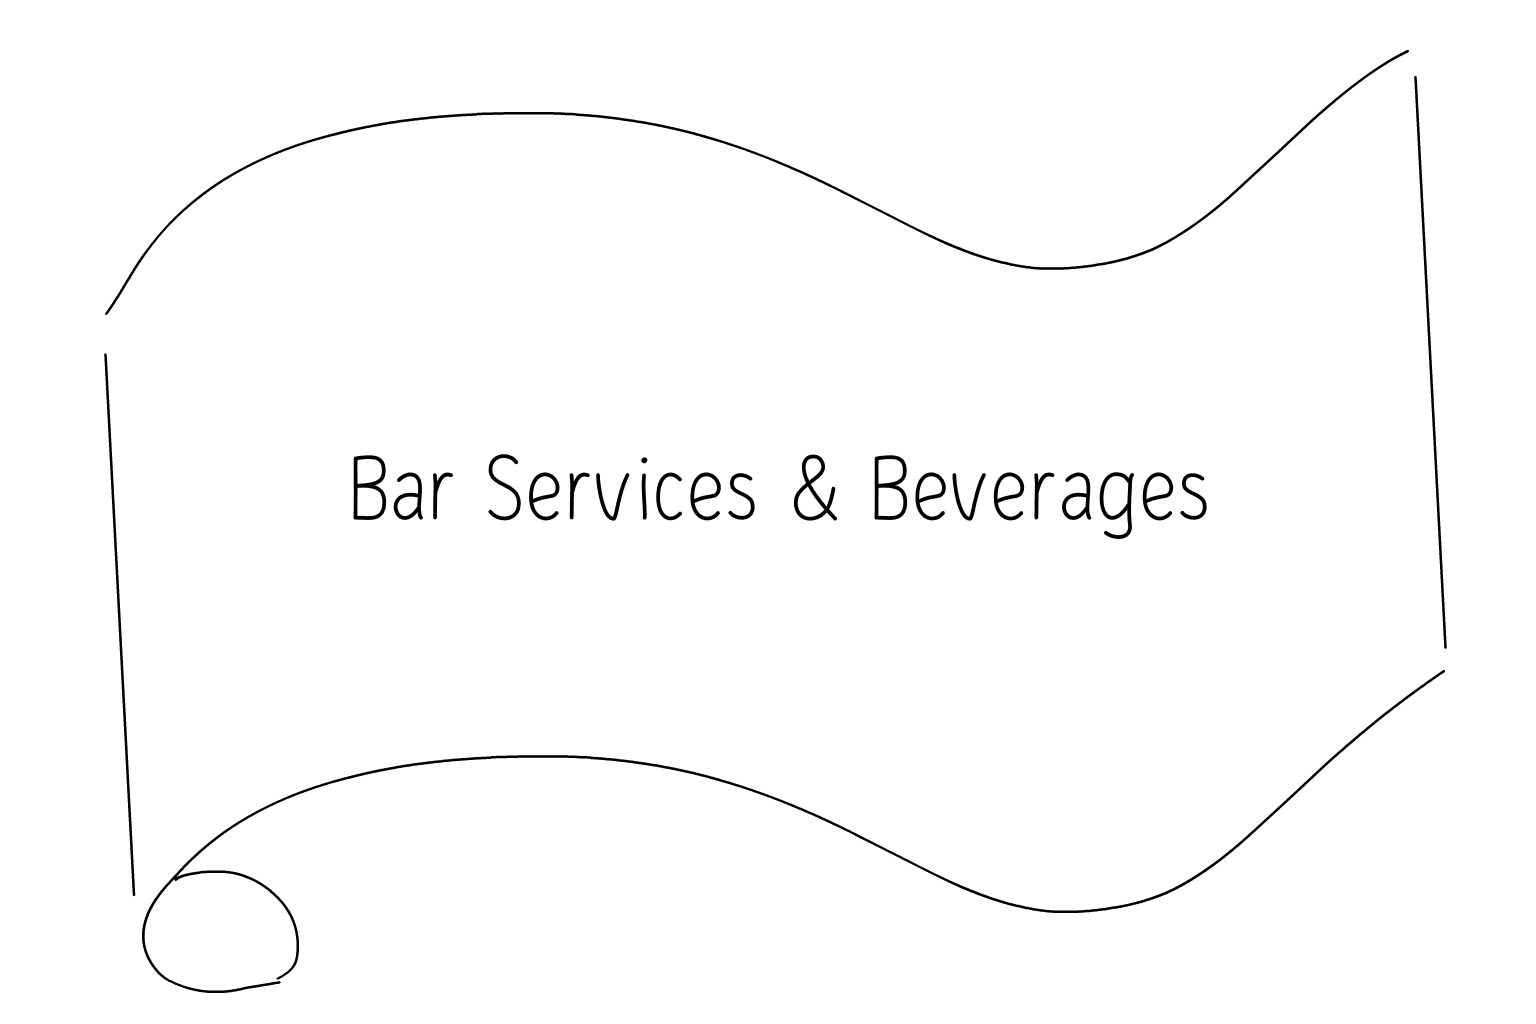 Illustration of Bar Services and Beverages